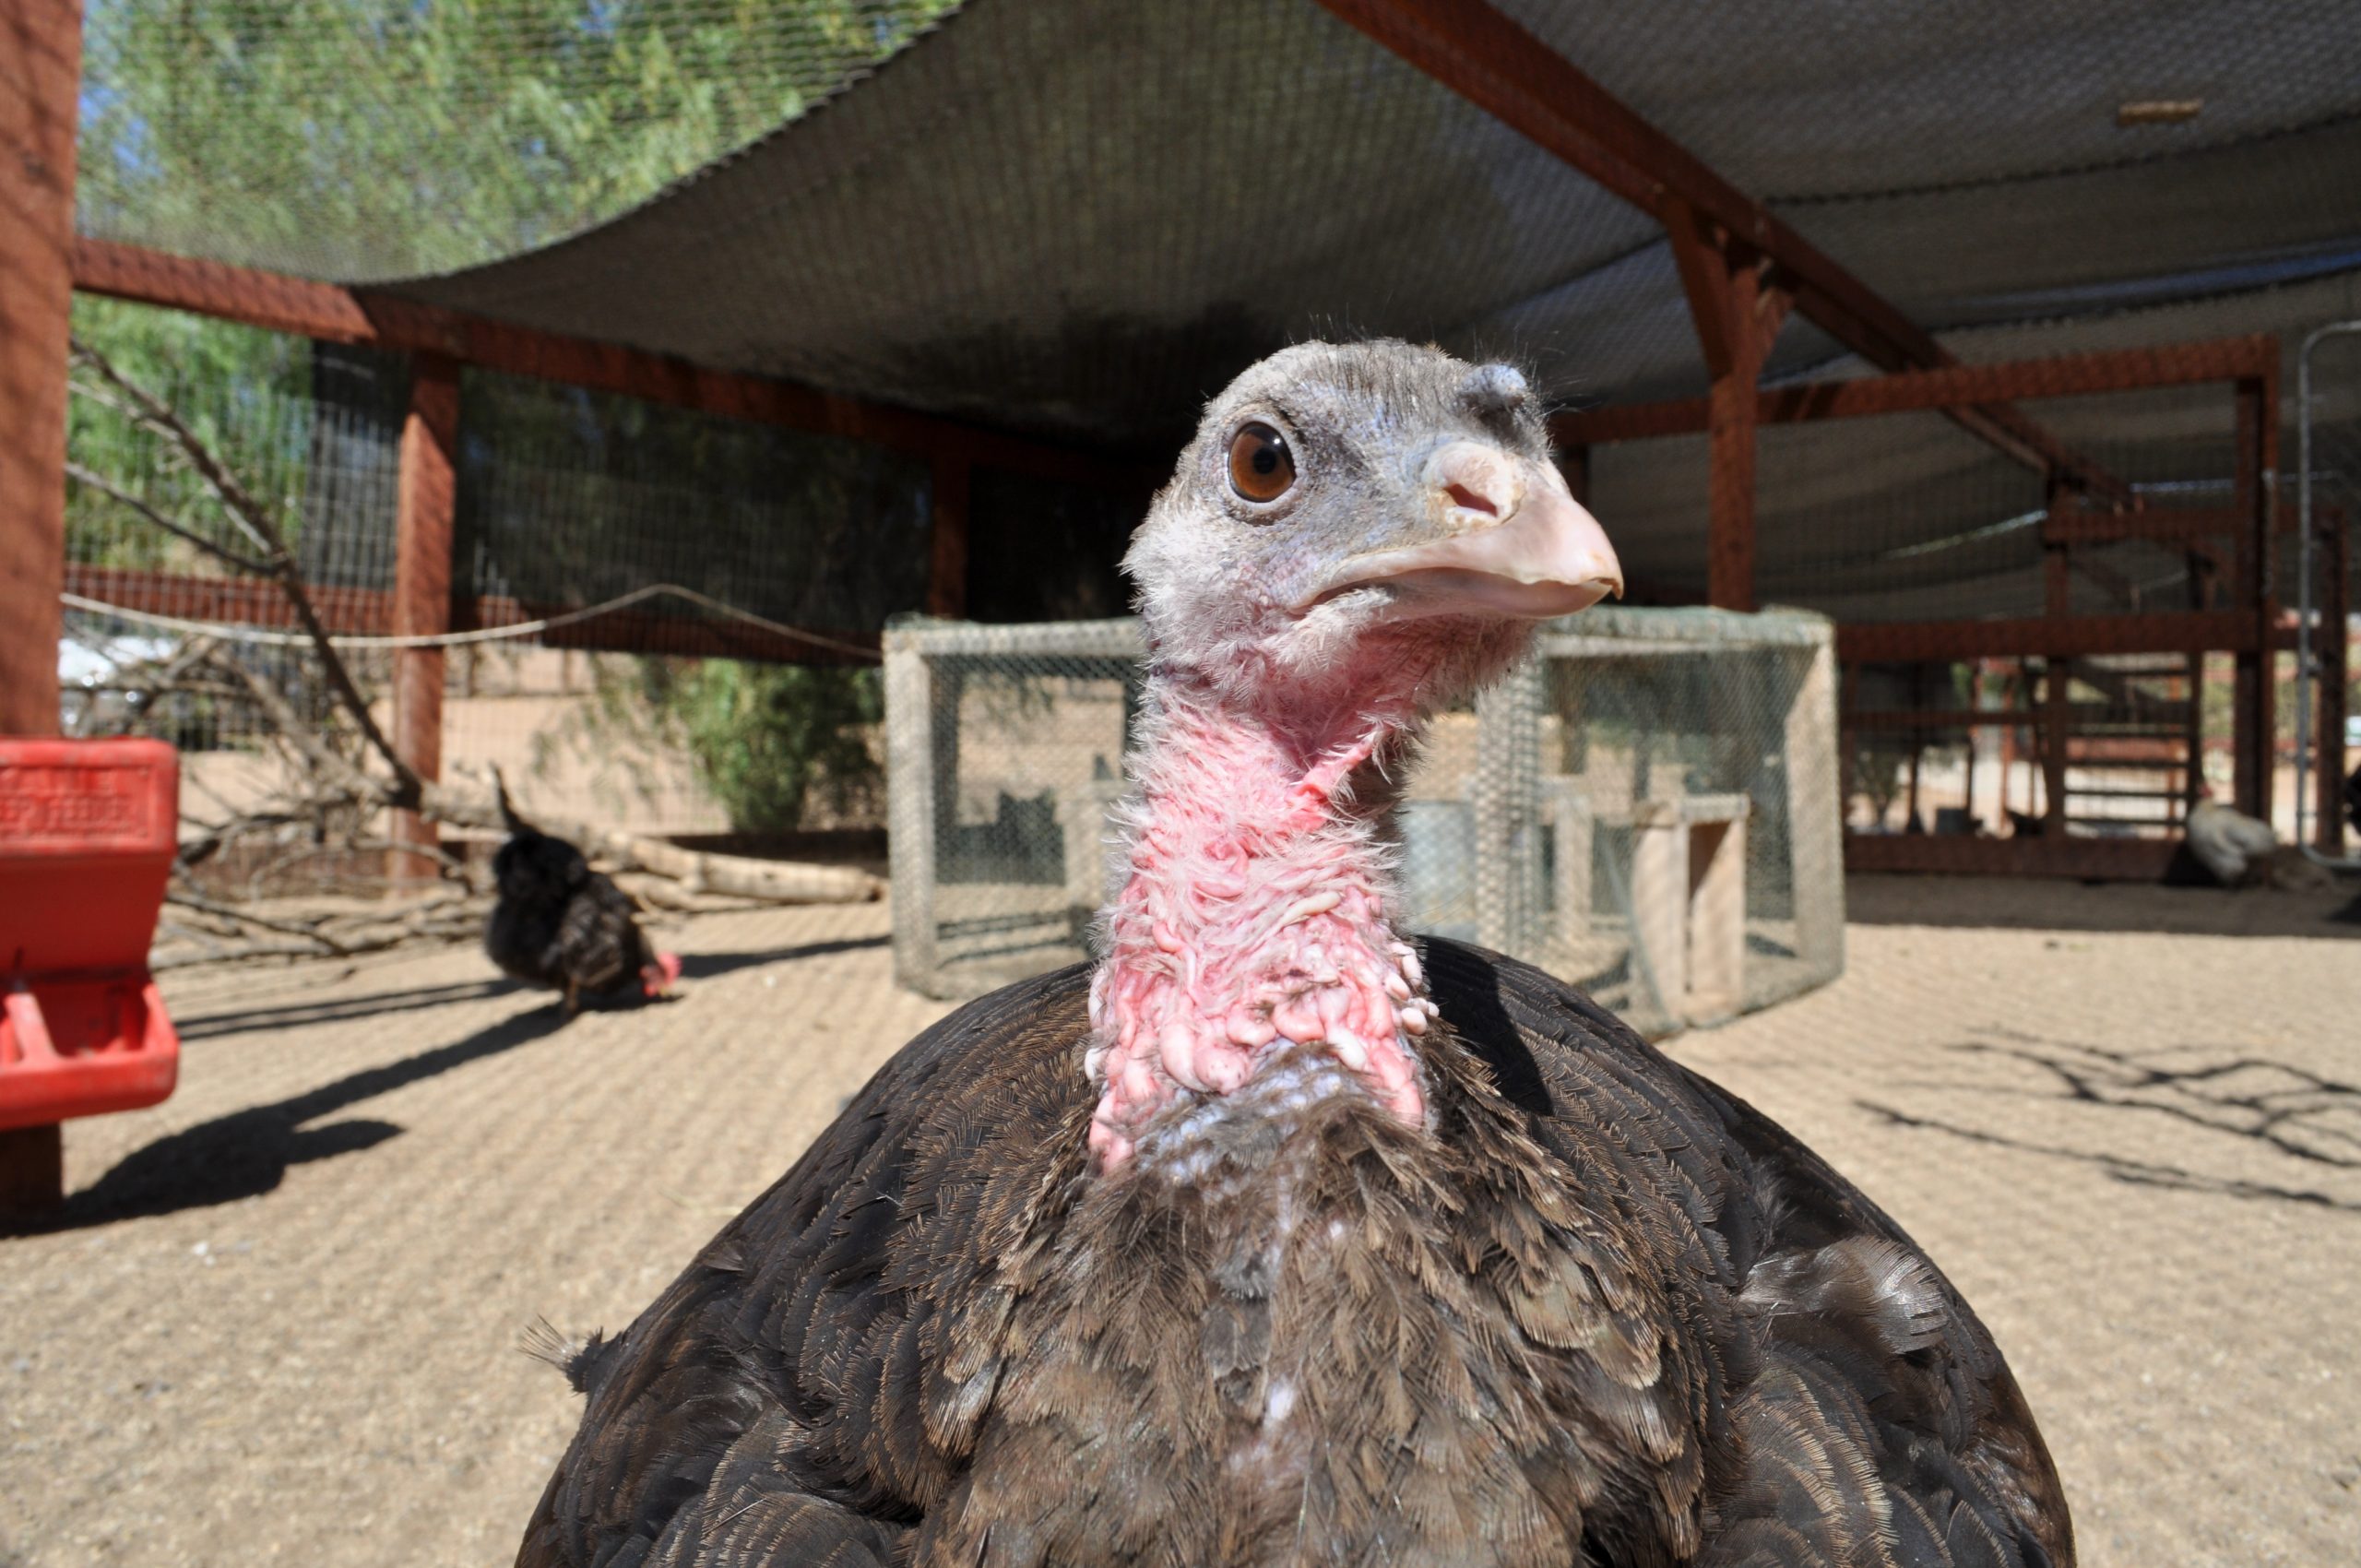 Serena Turkey at Farm Sanctuary's Southern California shelter